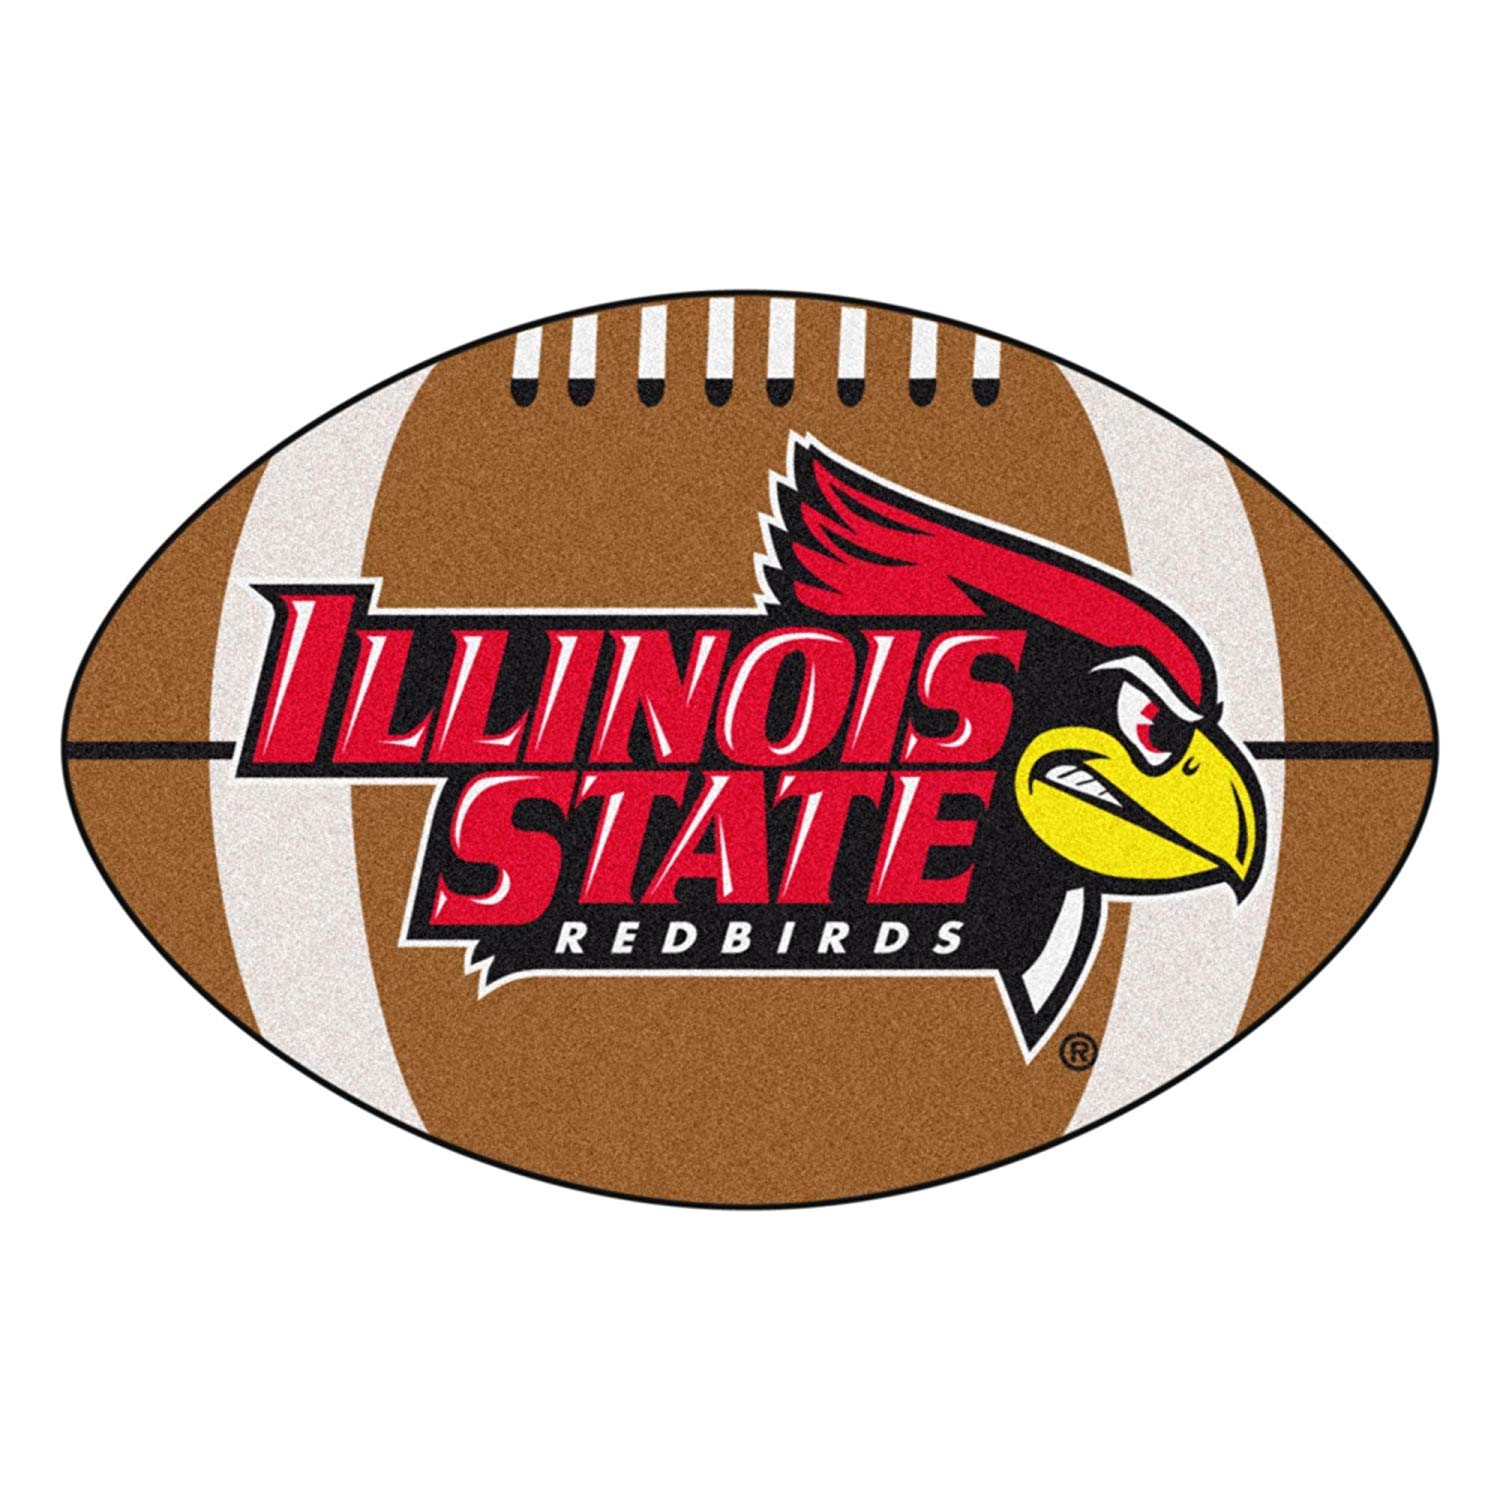 Illinois State Football Logo - Amazon.com : Football Rug w Illinois State Officially Licensed ...